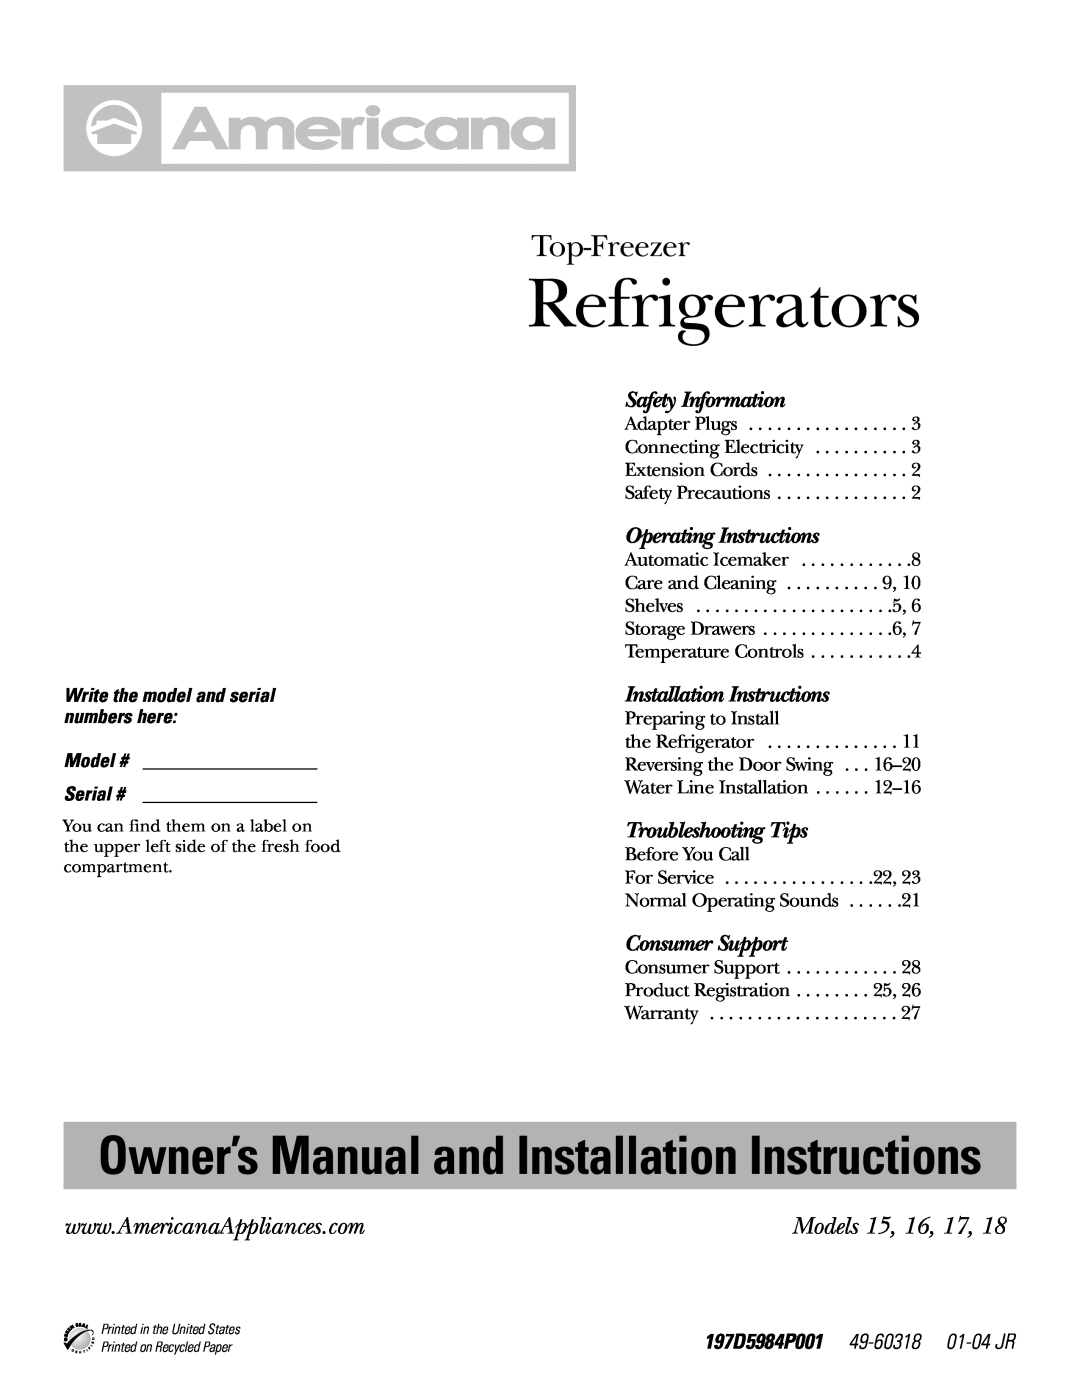 Americana Appliances installation instructions Refrigerators, Top-Freezer, Models 15, 16, 17, Safety Information 